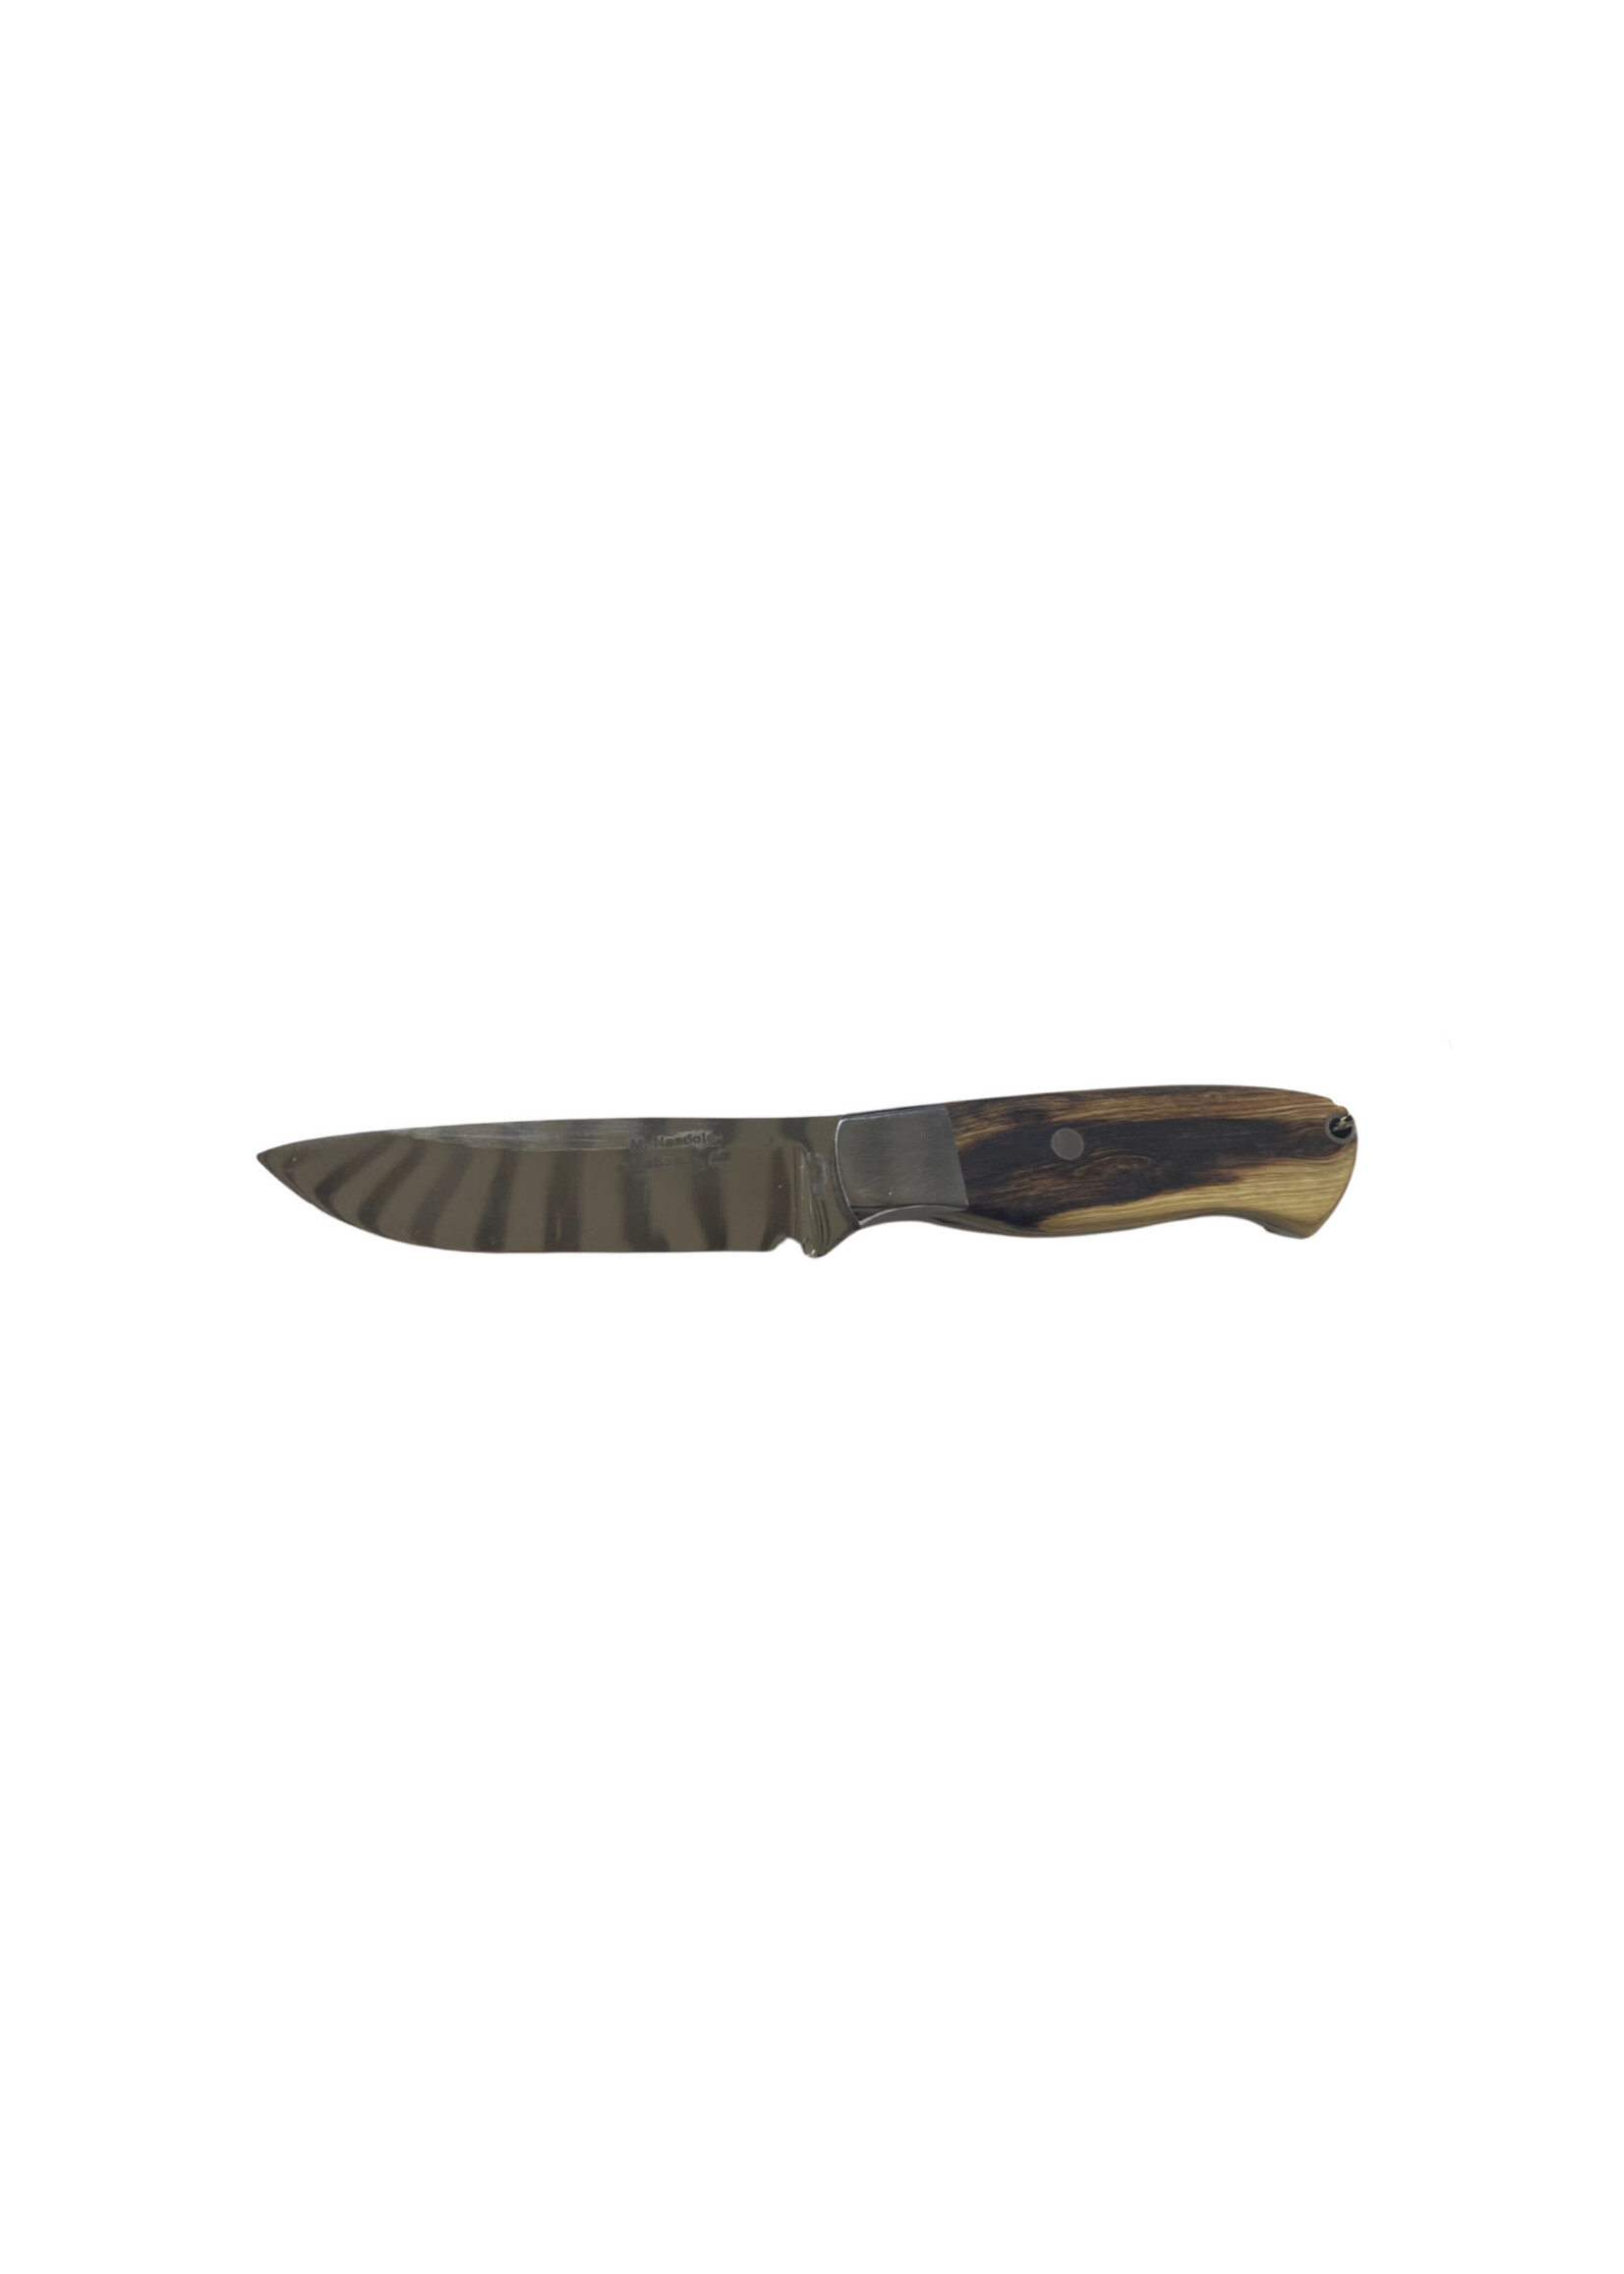 MORRIS KNIVES HUNTER KNIFE 4.5” AEB-L CARAGANA W/LEATHER SHEATH